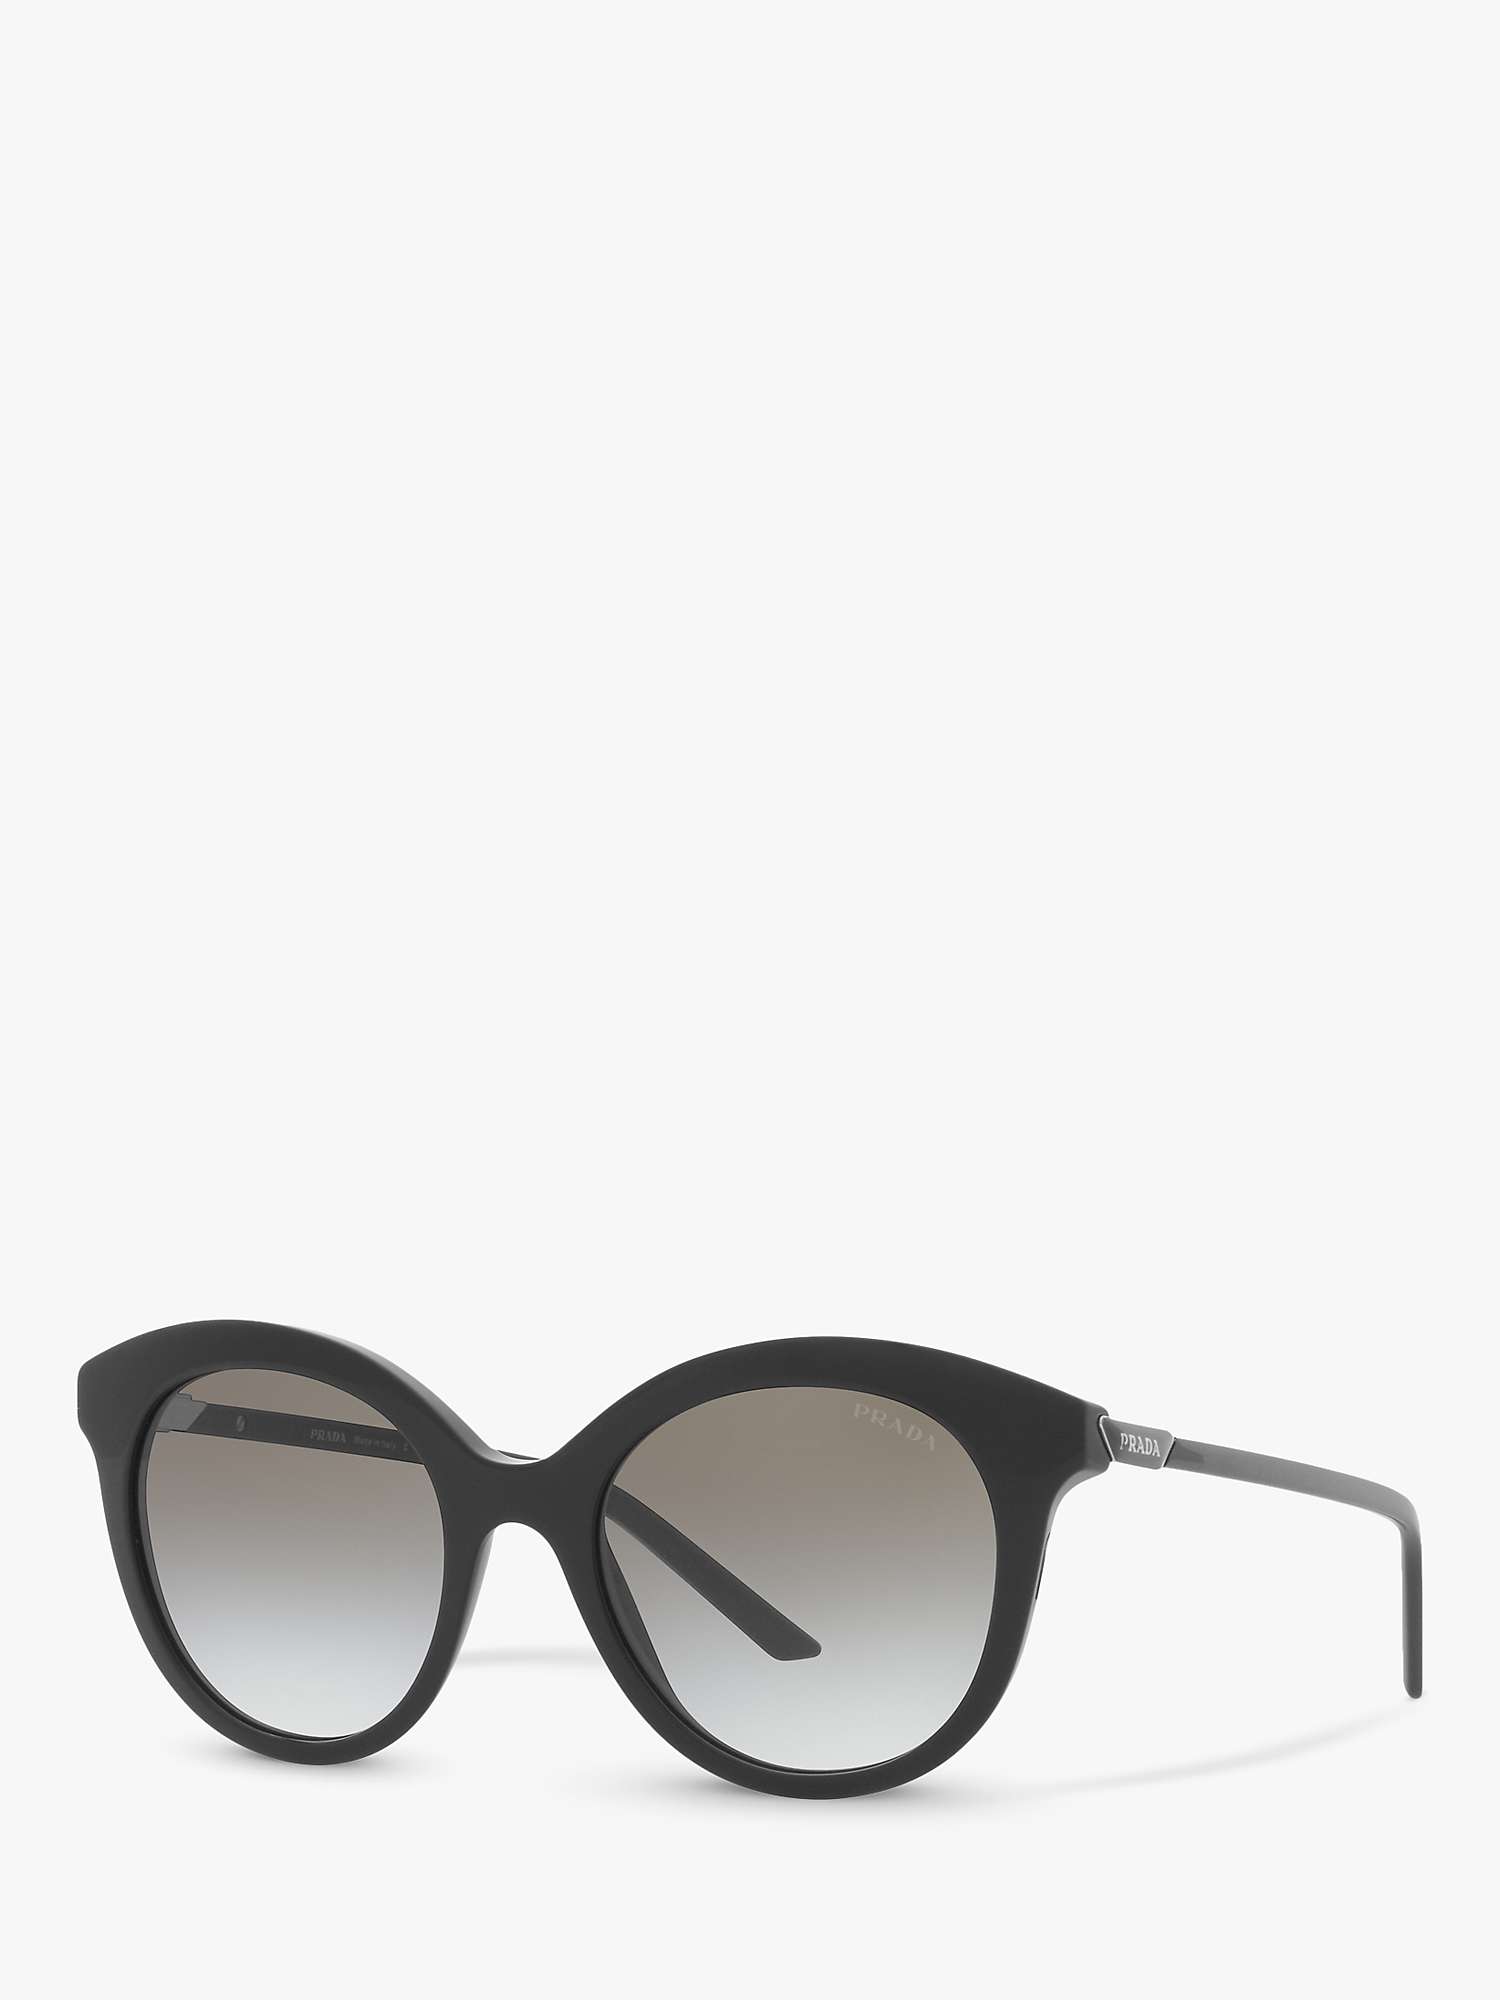 Buy Prada PR 02YS Women's Round Sunglasses, Black/Grey Online at johnlewis.com